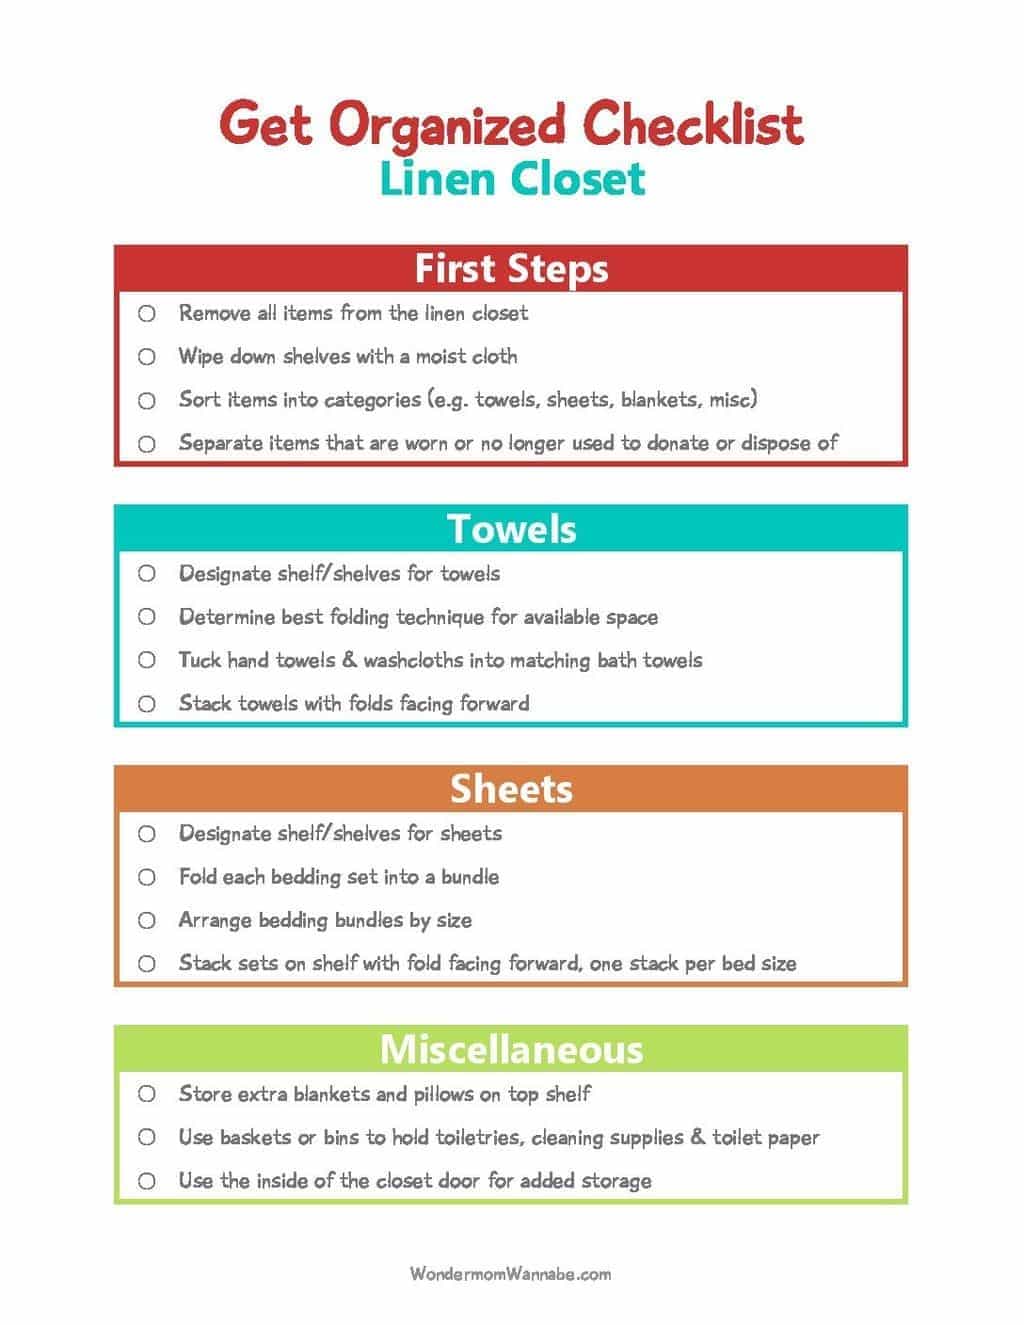 printable Get Organized Checklist Linen Closet